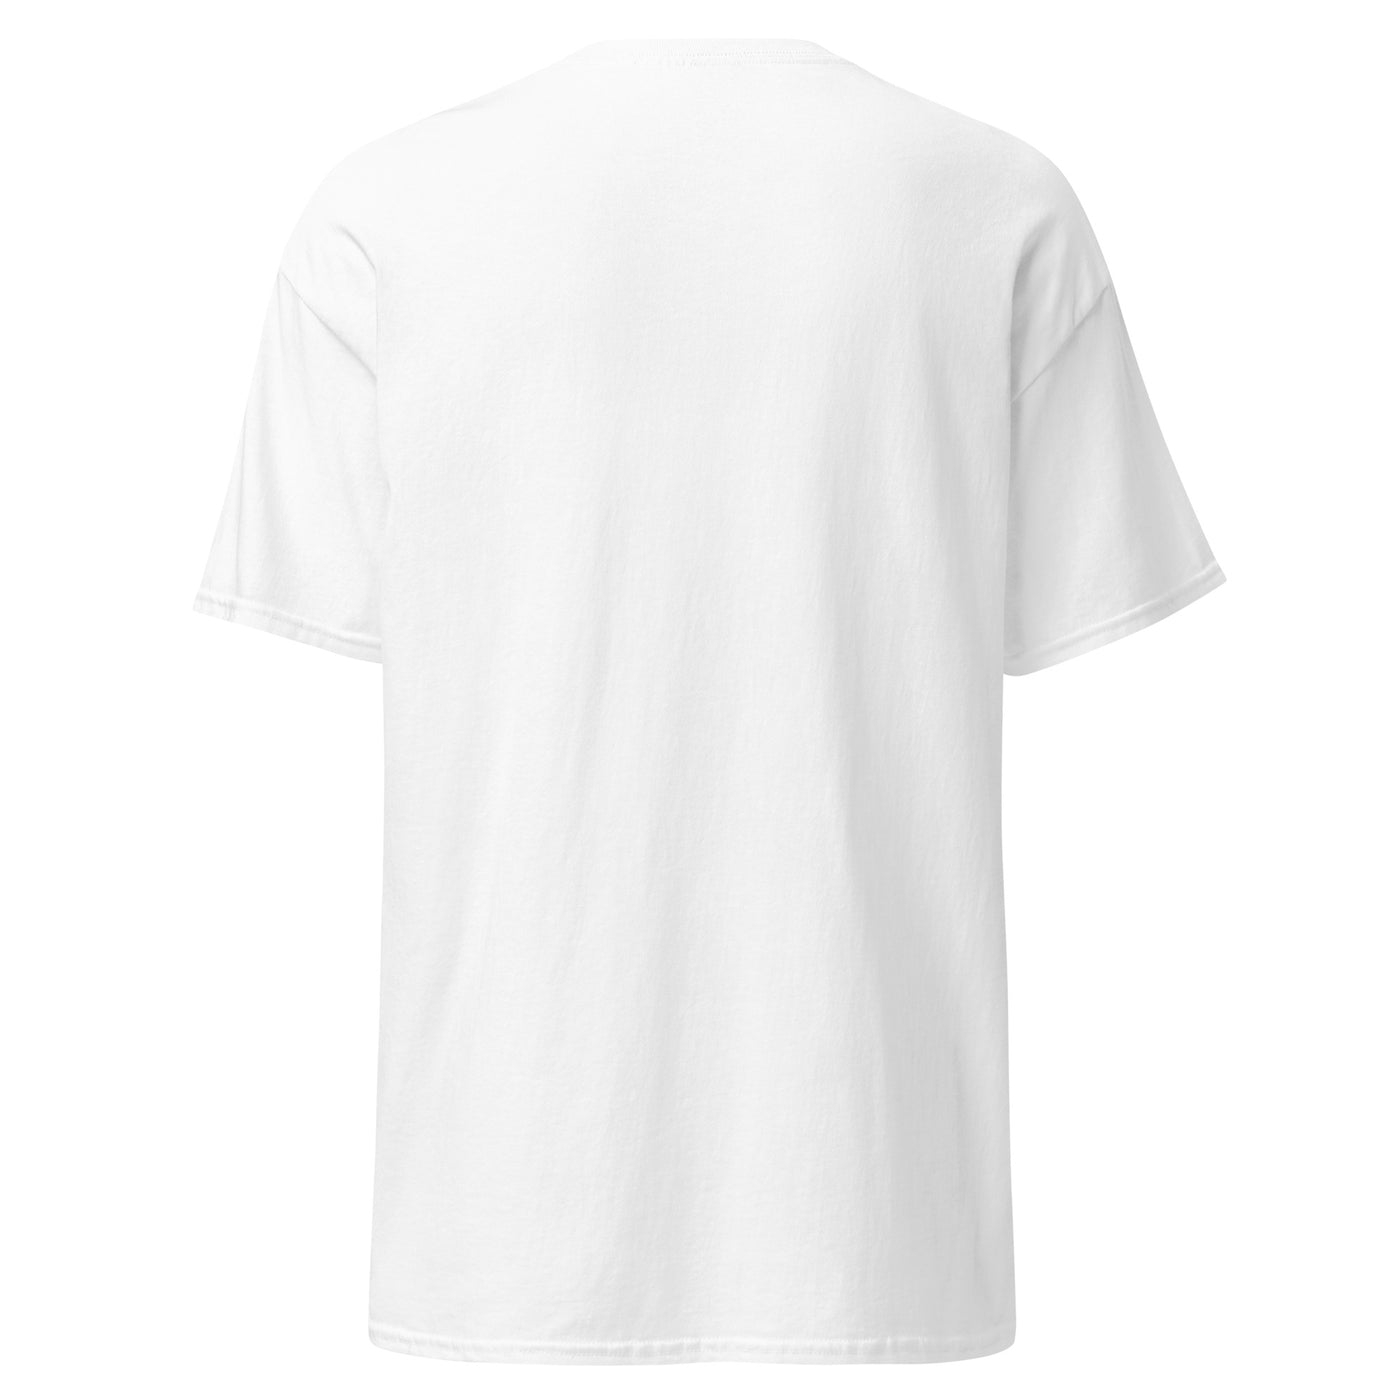 OYWO 'the 30 > life' White Unisex T-Shirt